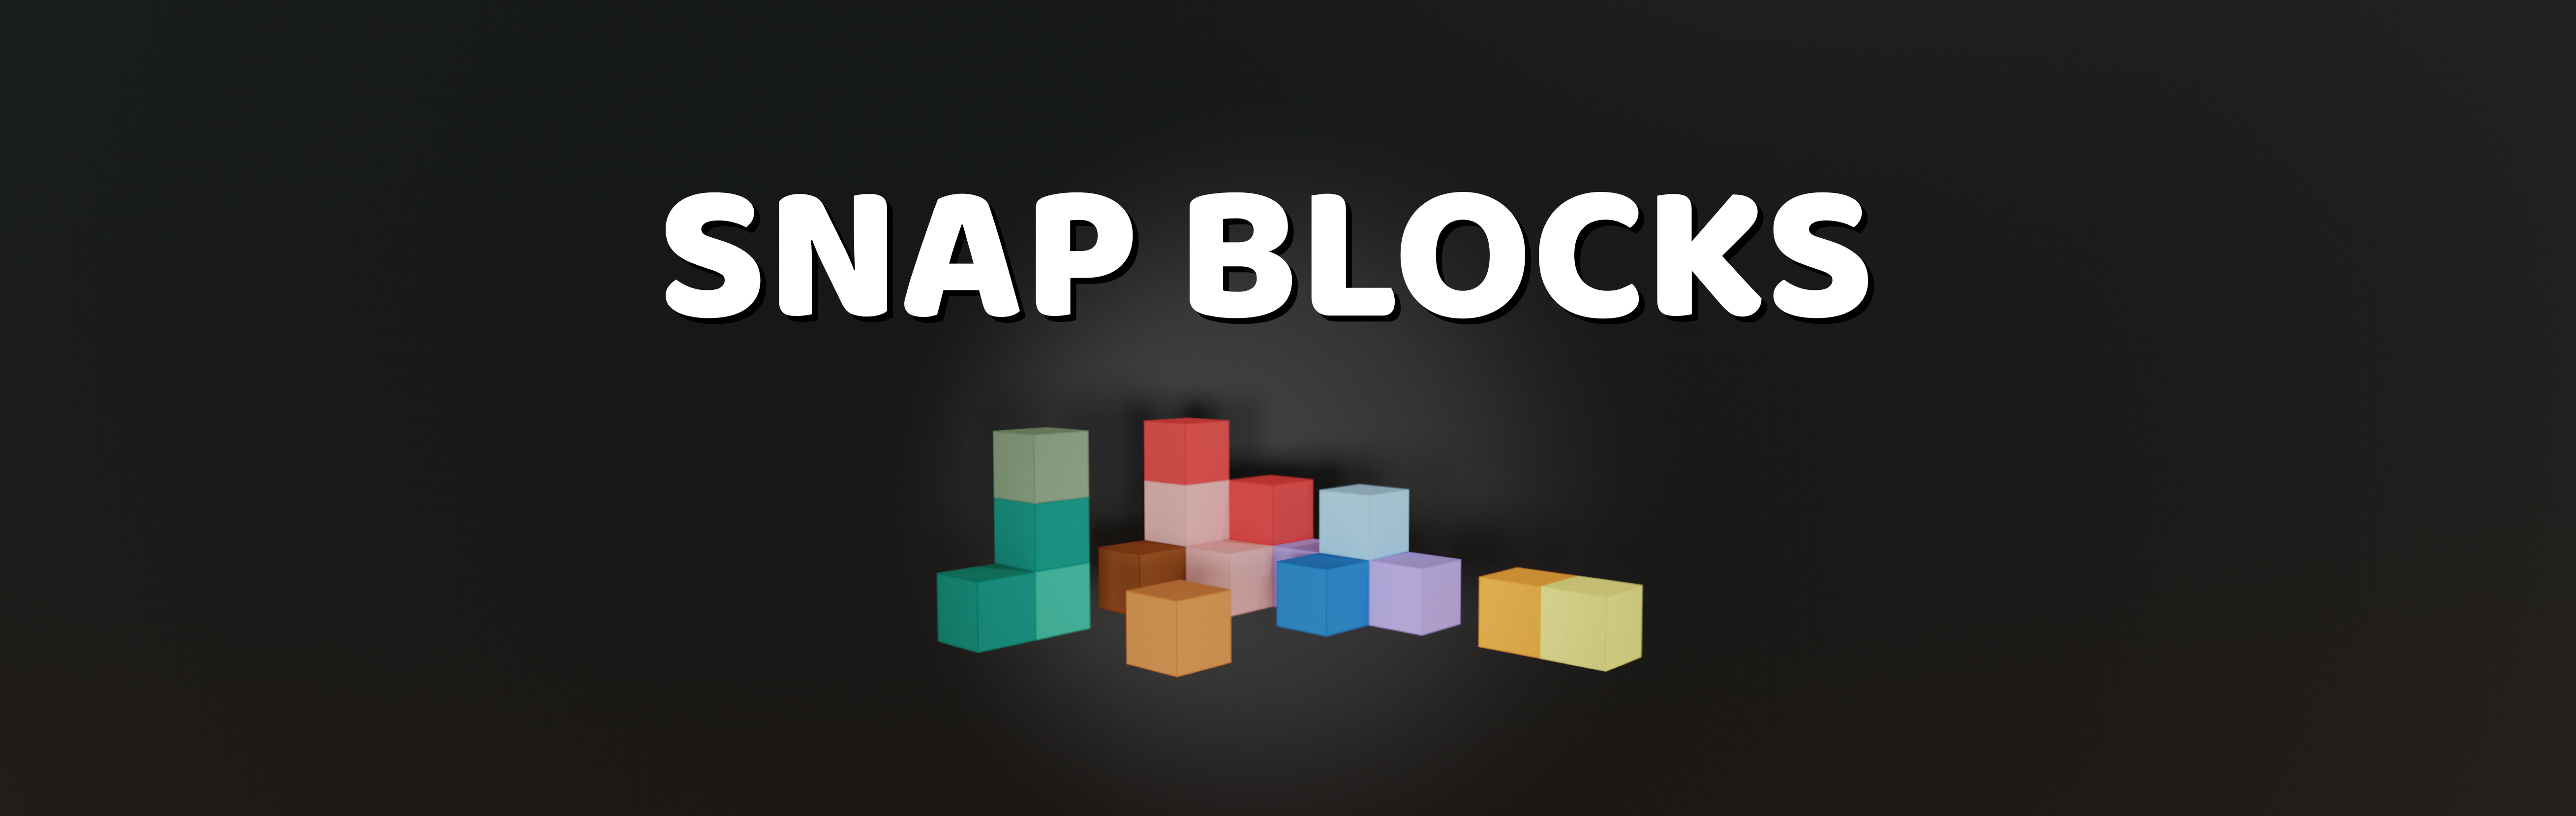 Snap Blocks